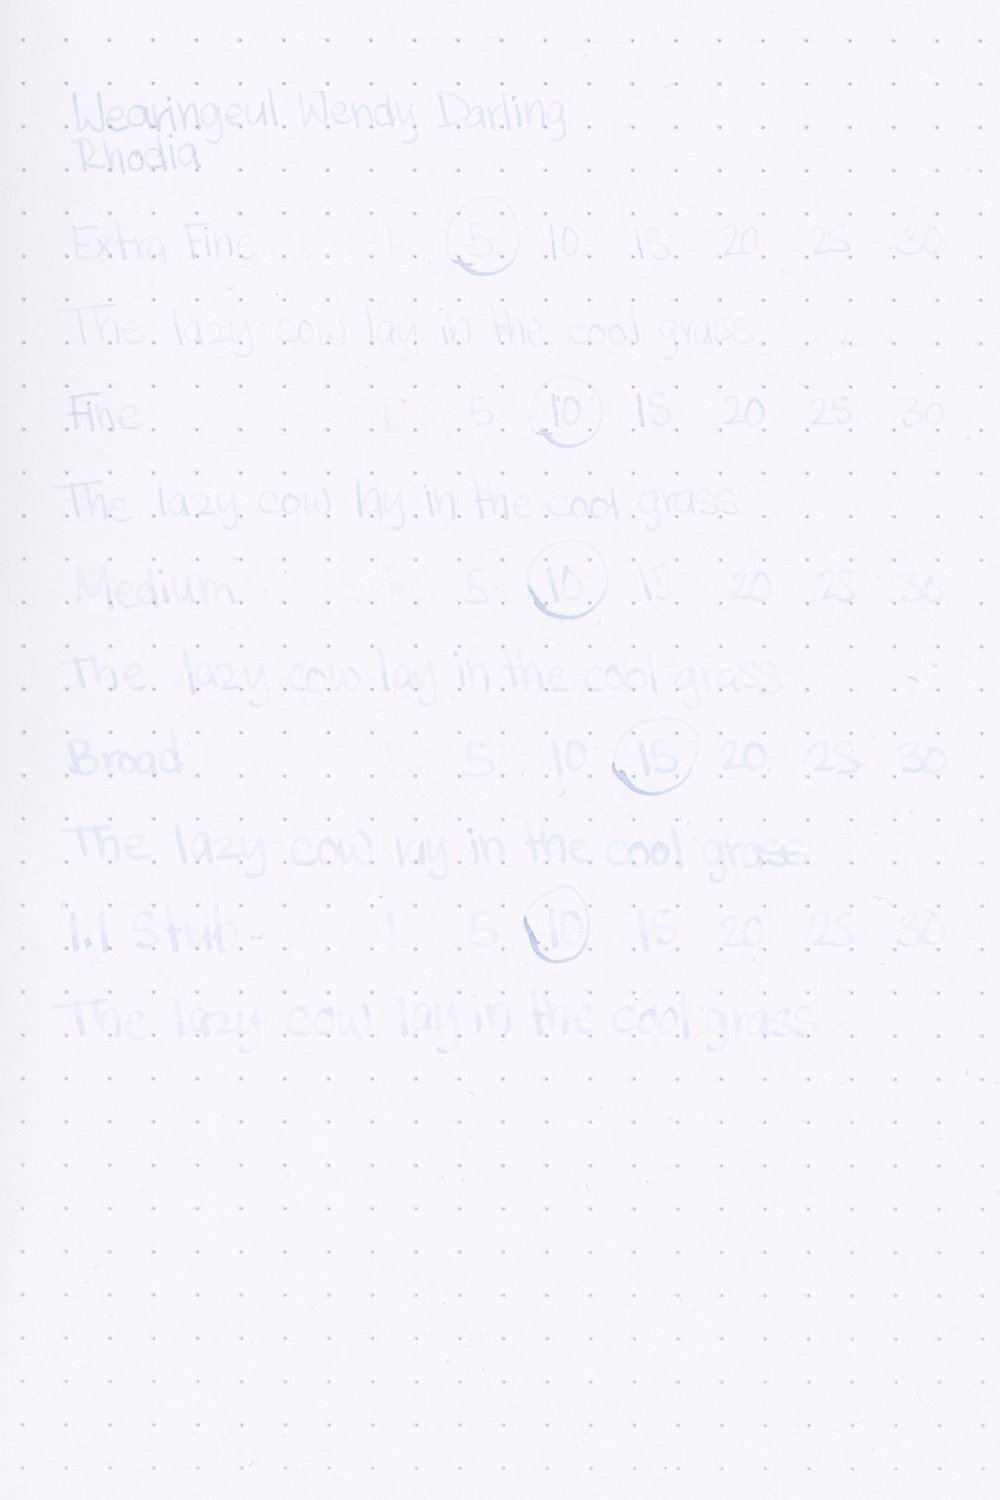 Wearingeul-Wendy-Darling-Ink-Test-Rhodia-Front.jpg